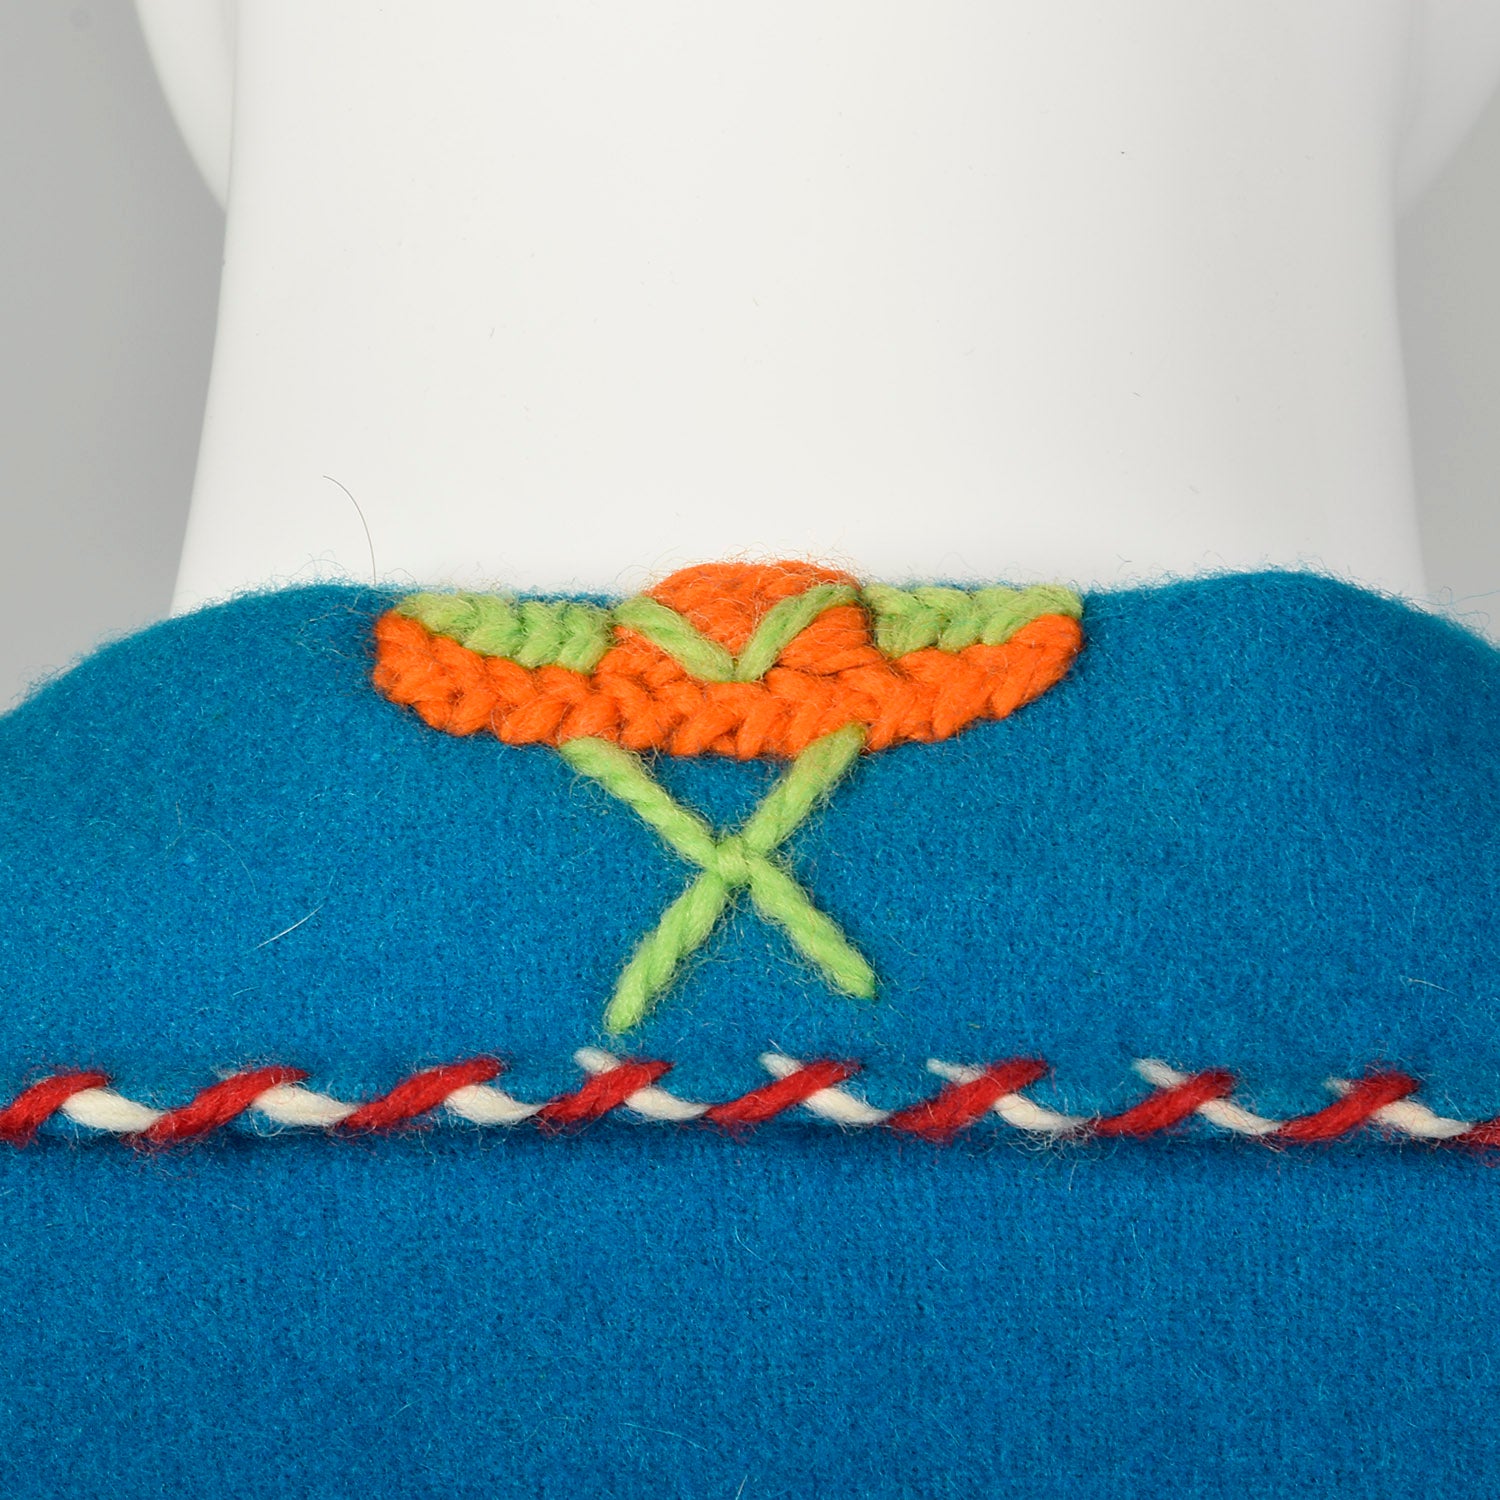 XXS 1950s Jacket Teal Blue Mexican Souvenir Tourist Wool Embroidery Horse Shoe Sombrero Village Scene